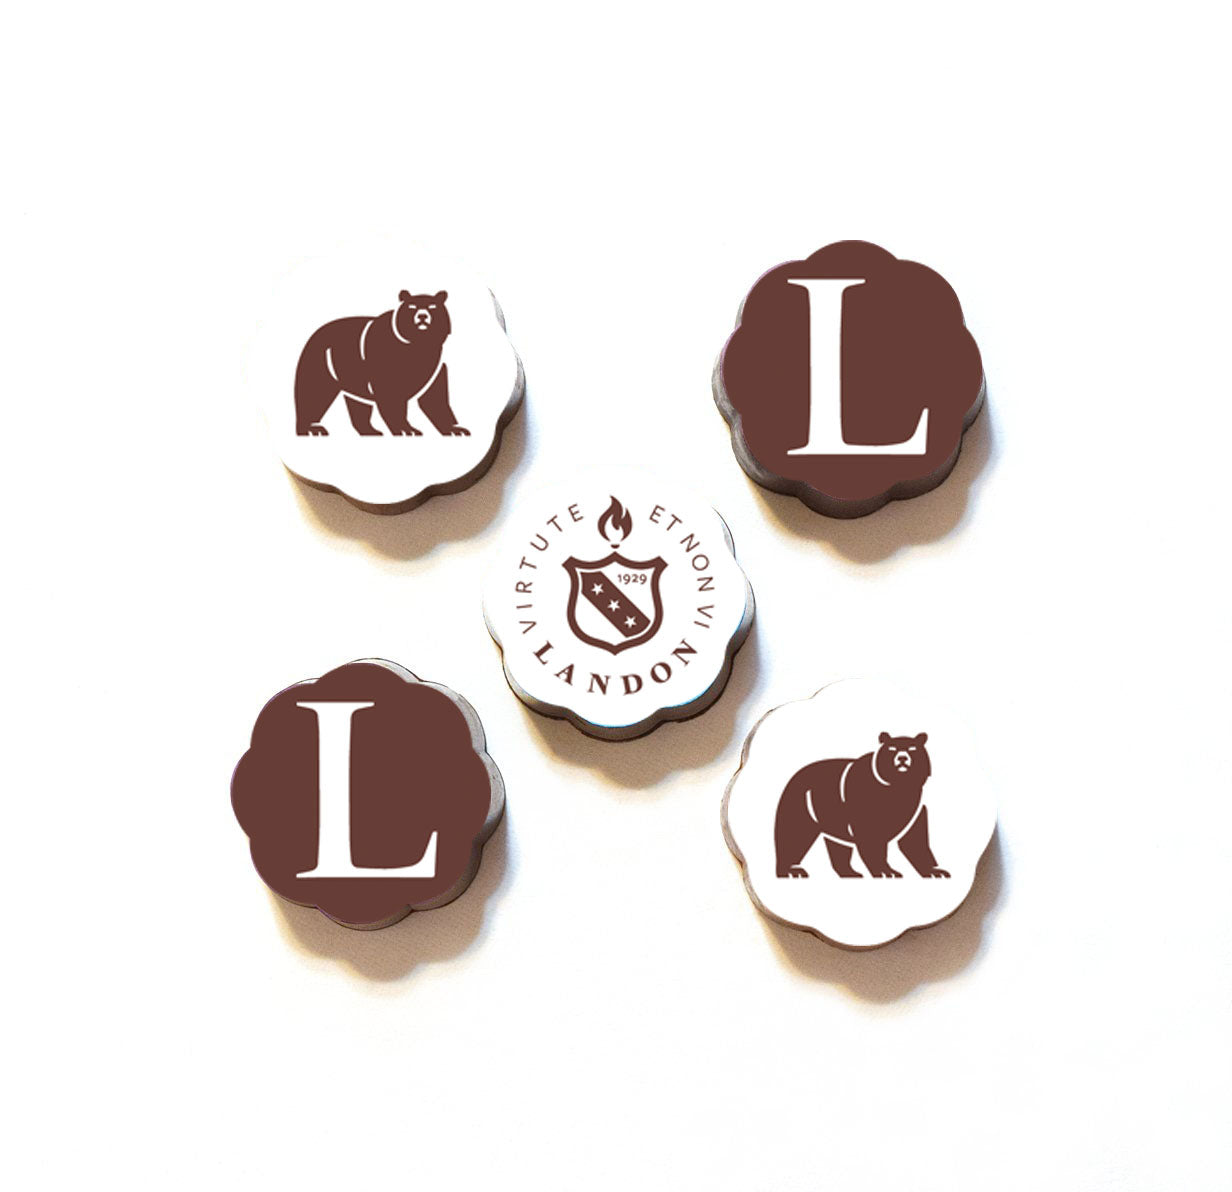 Landon Chocolates